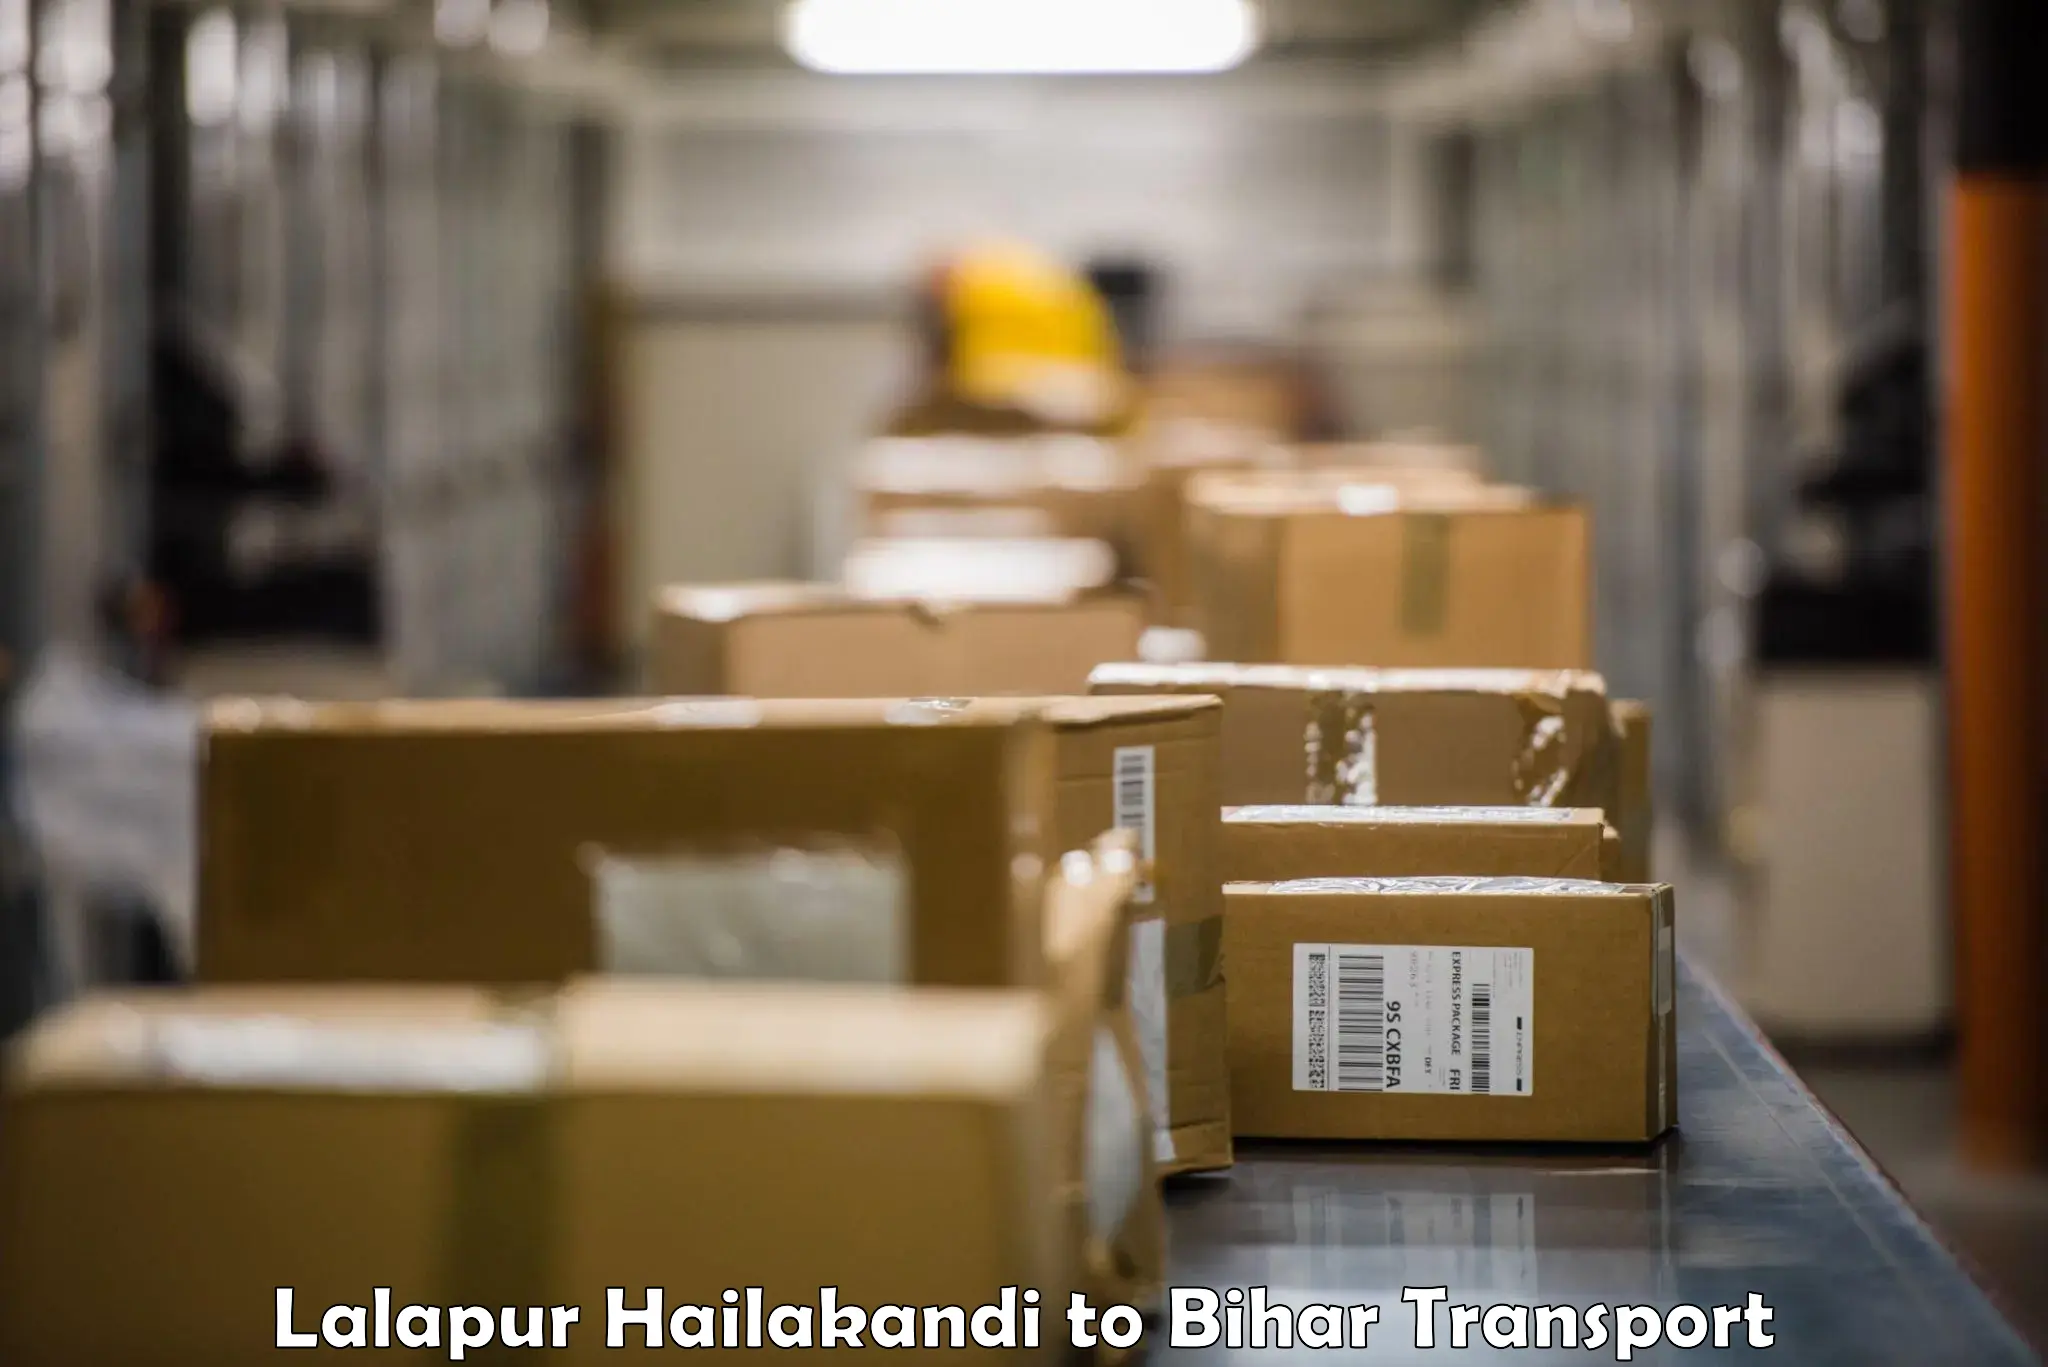 Pick up transport service Lalapur Hailakandi to Dhaka